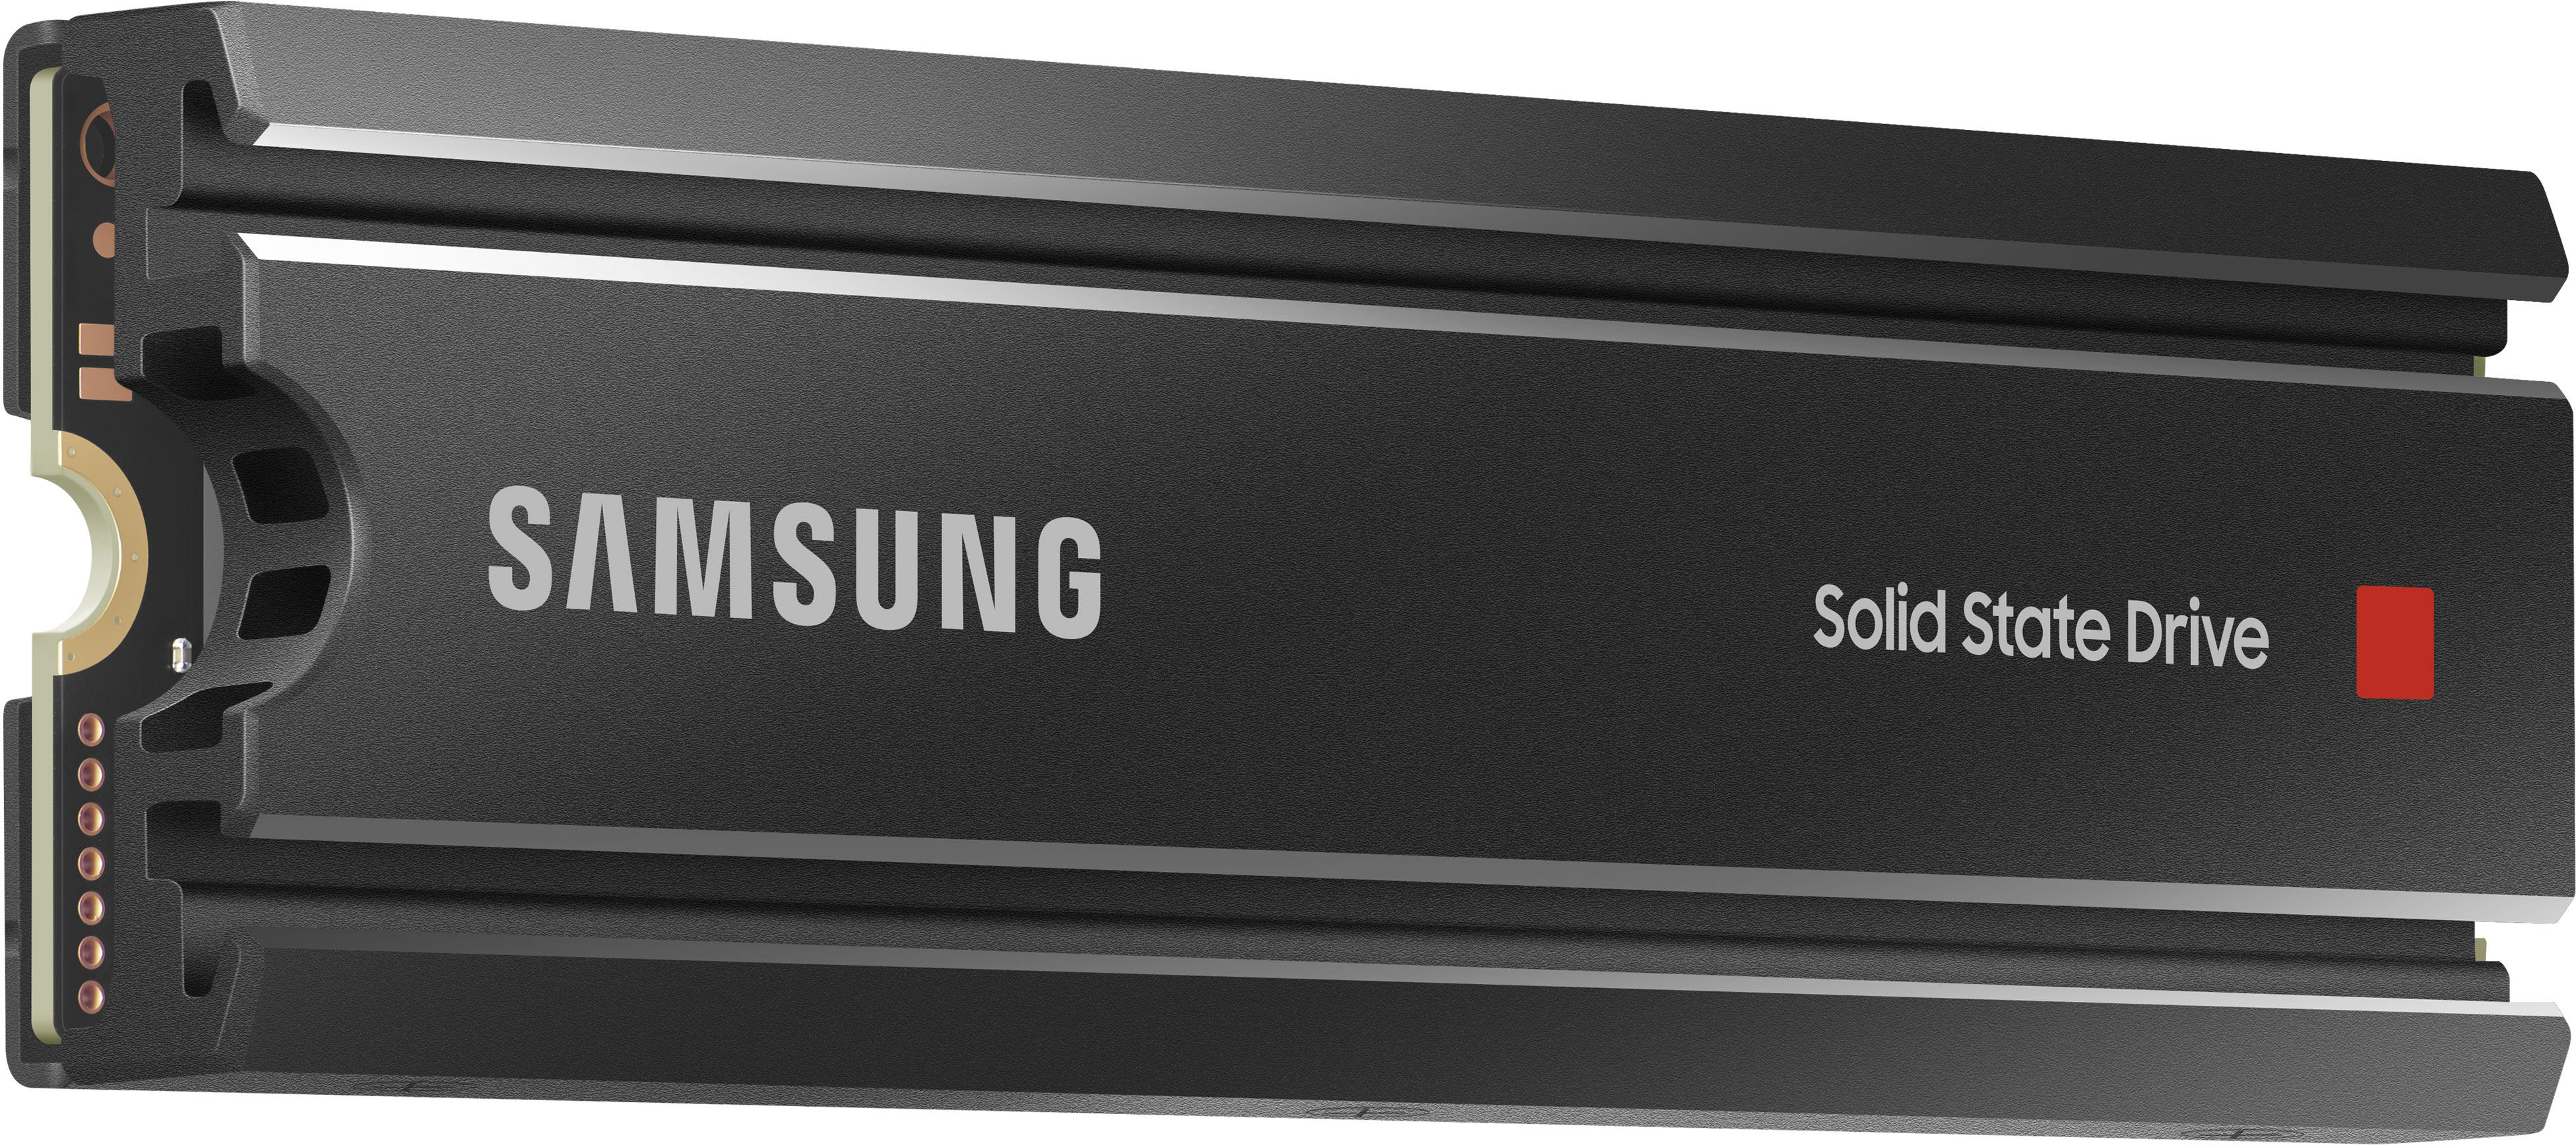 Samsung 980 Pro with Heatsink 1TB Review